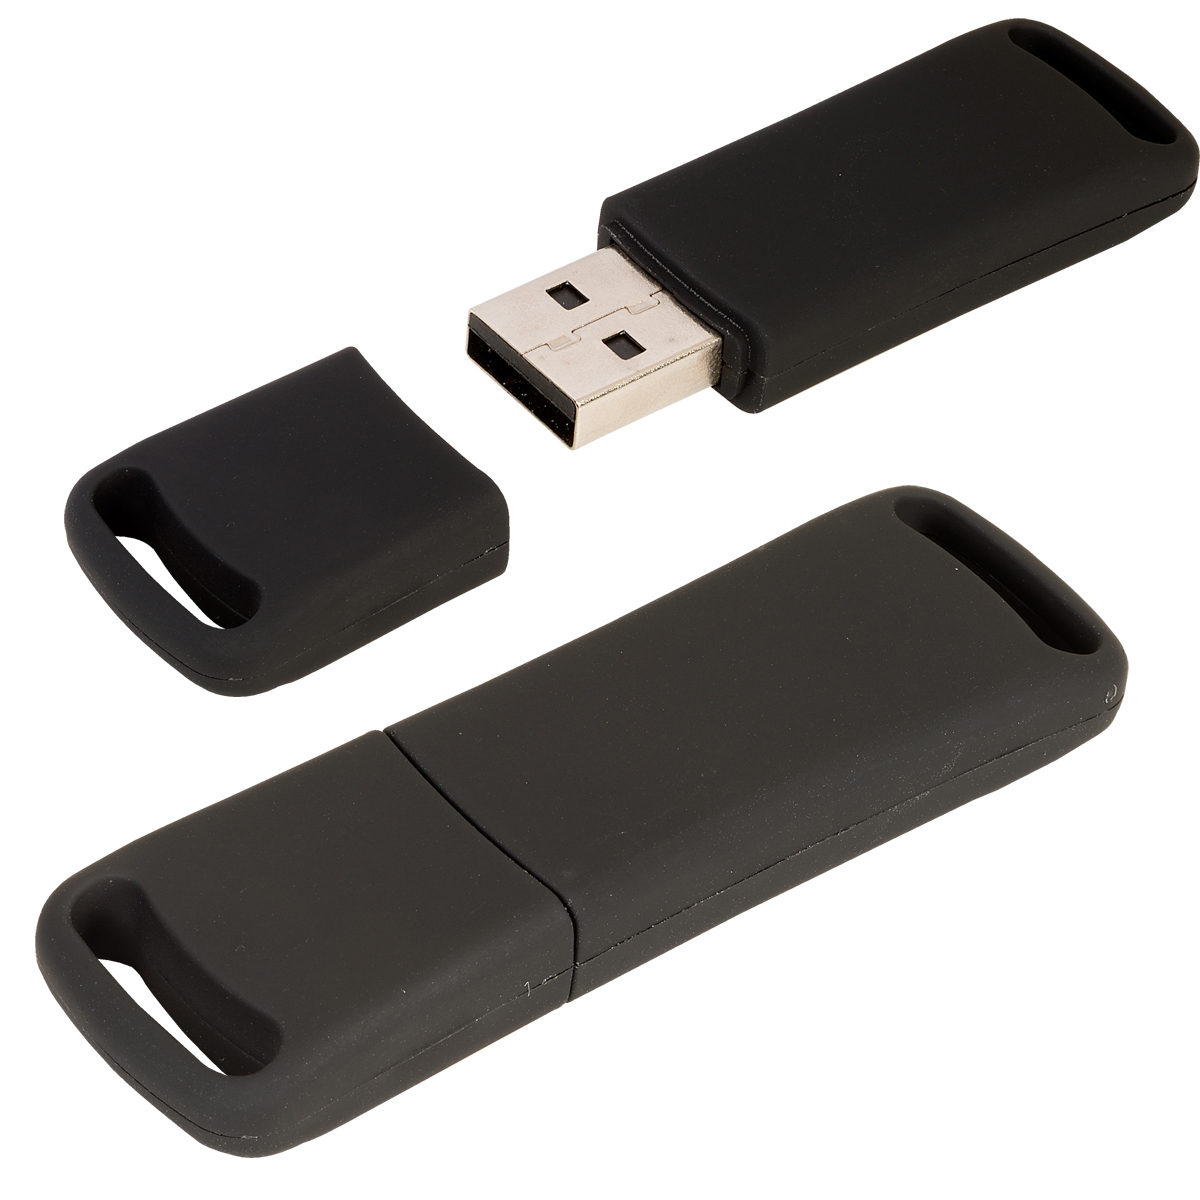 Rubberized USB Memory Flash Drive - 16GB